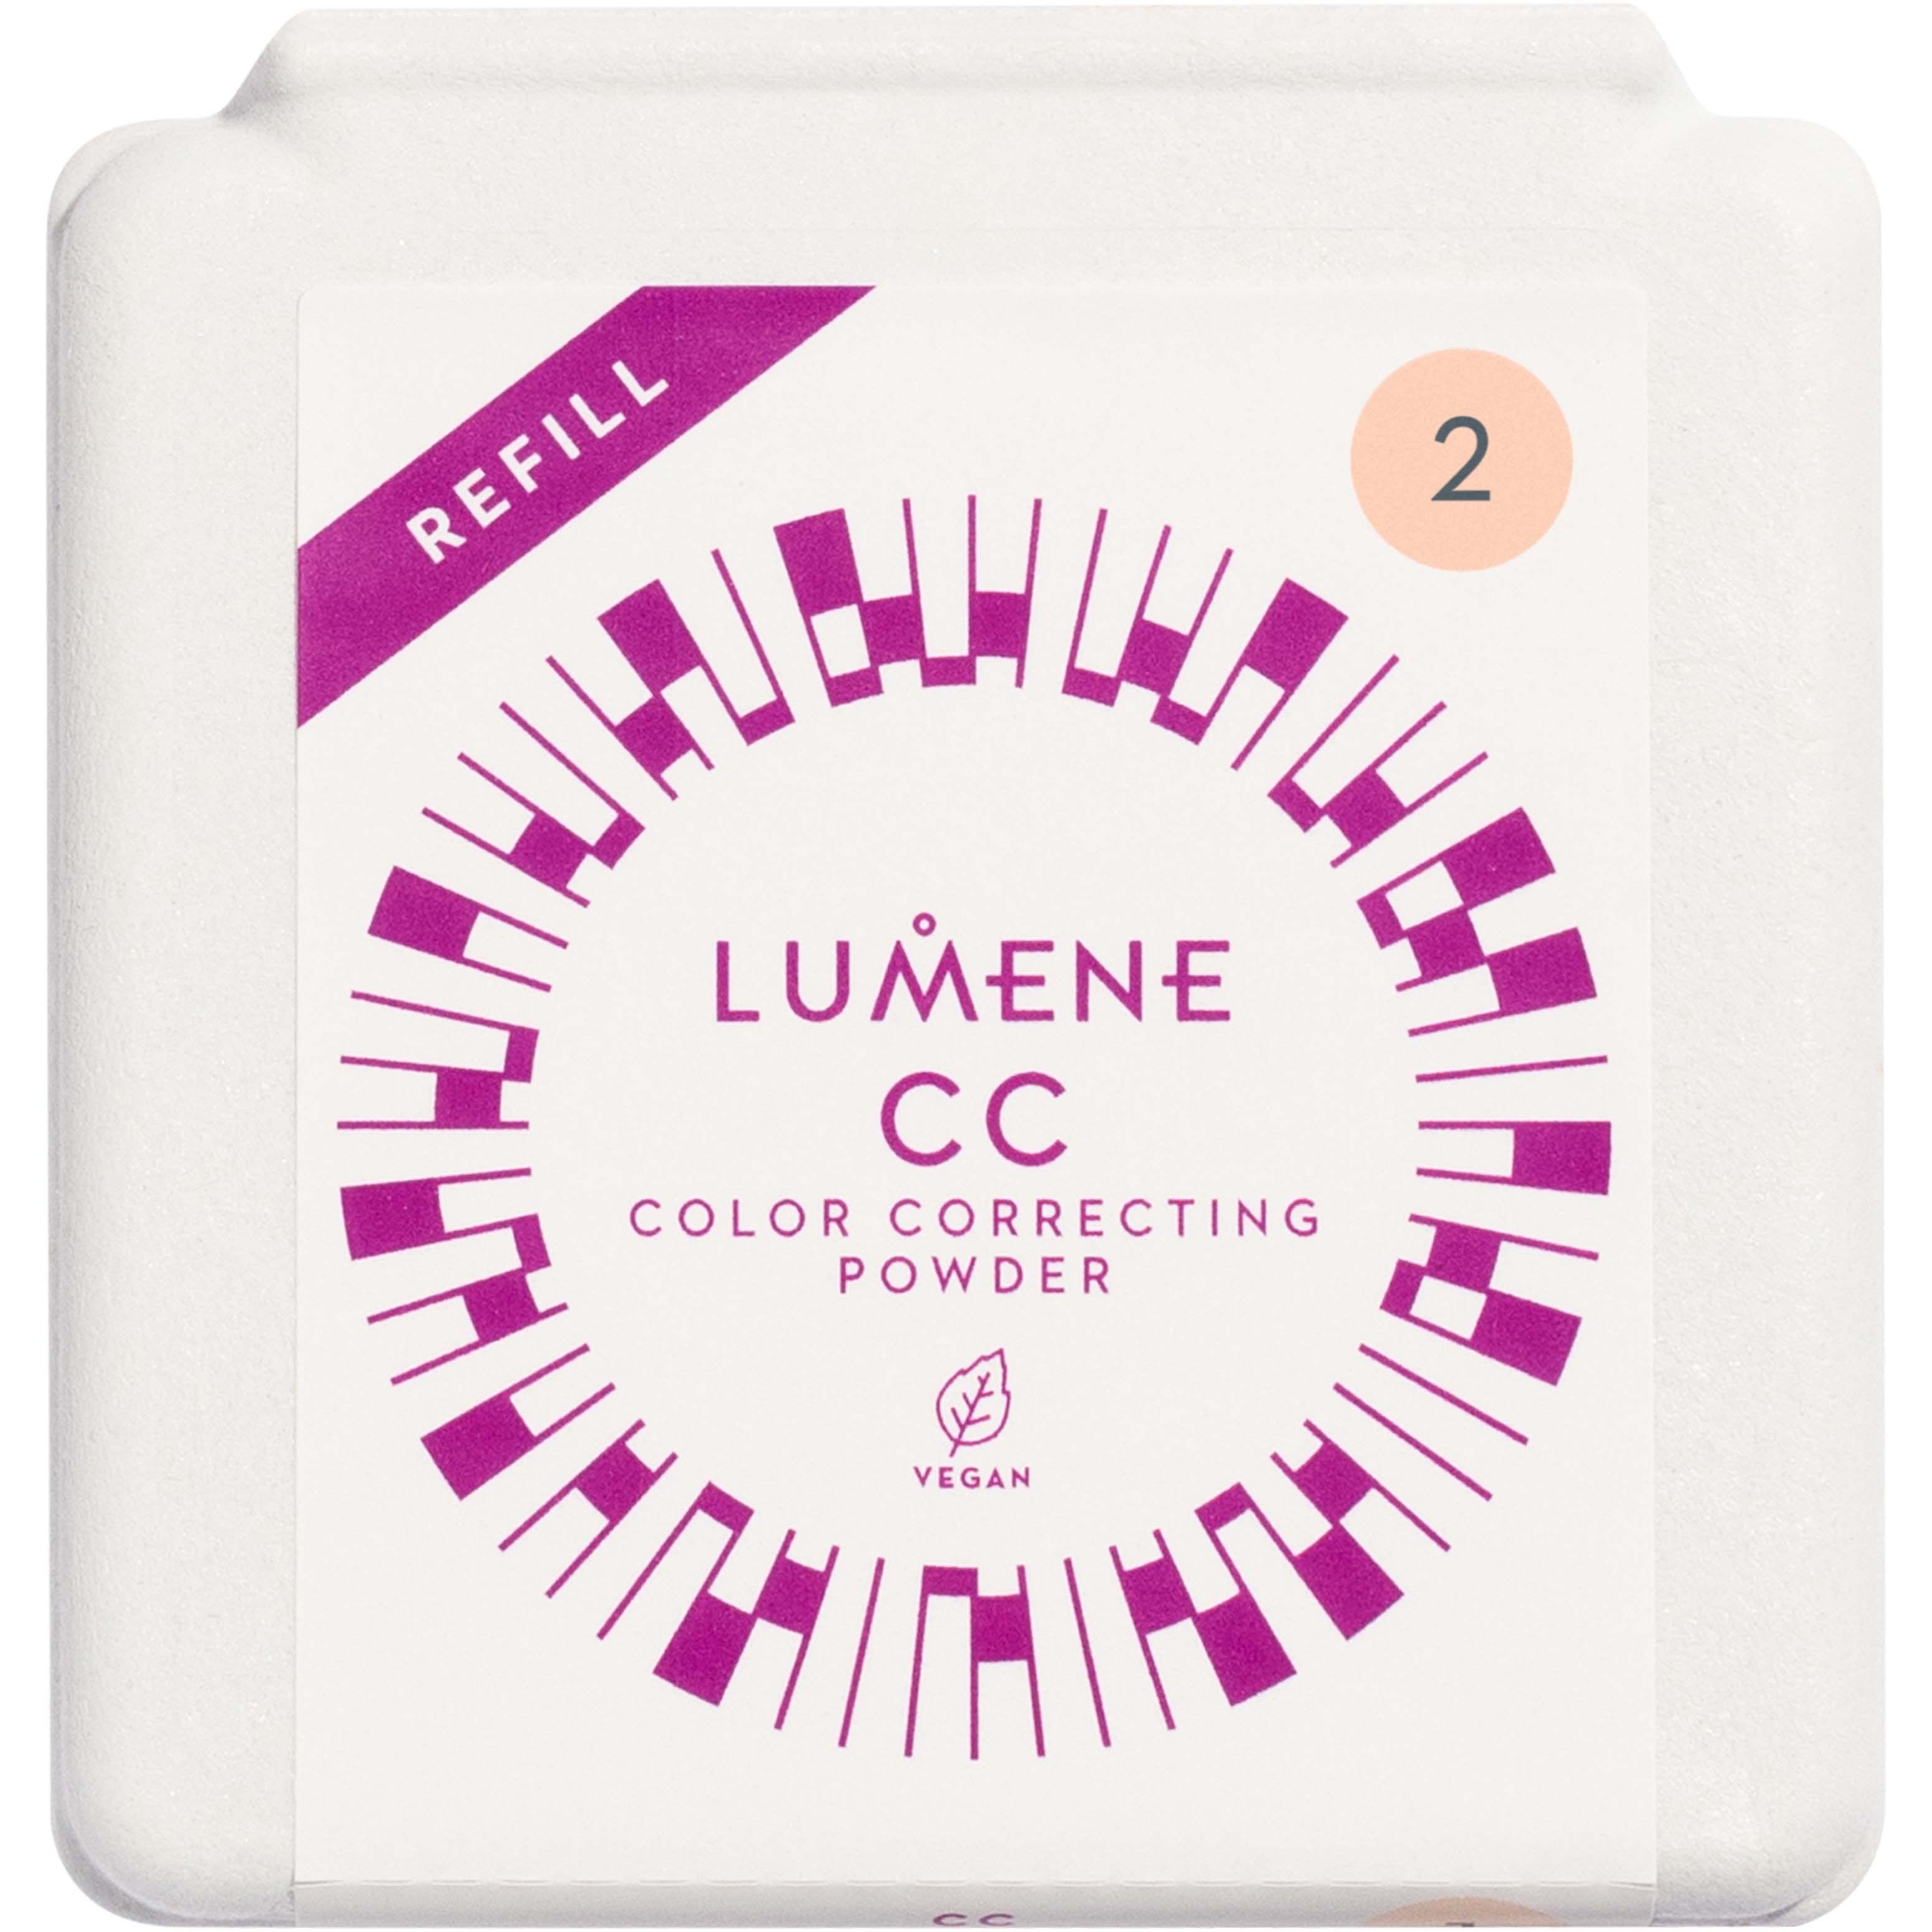 Lumene CC Color Correcting Powder Refill 2